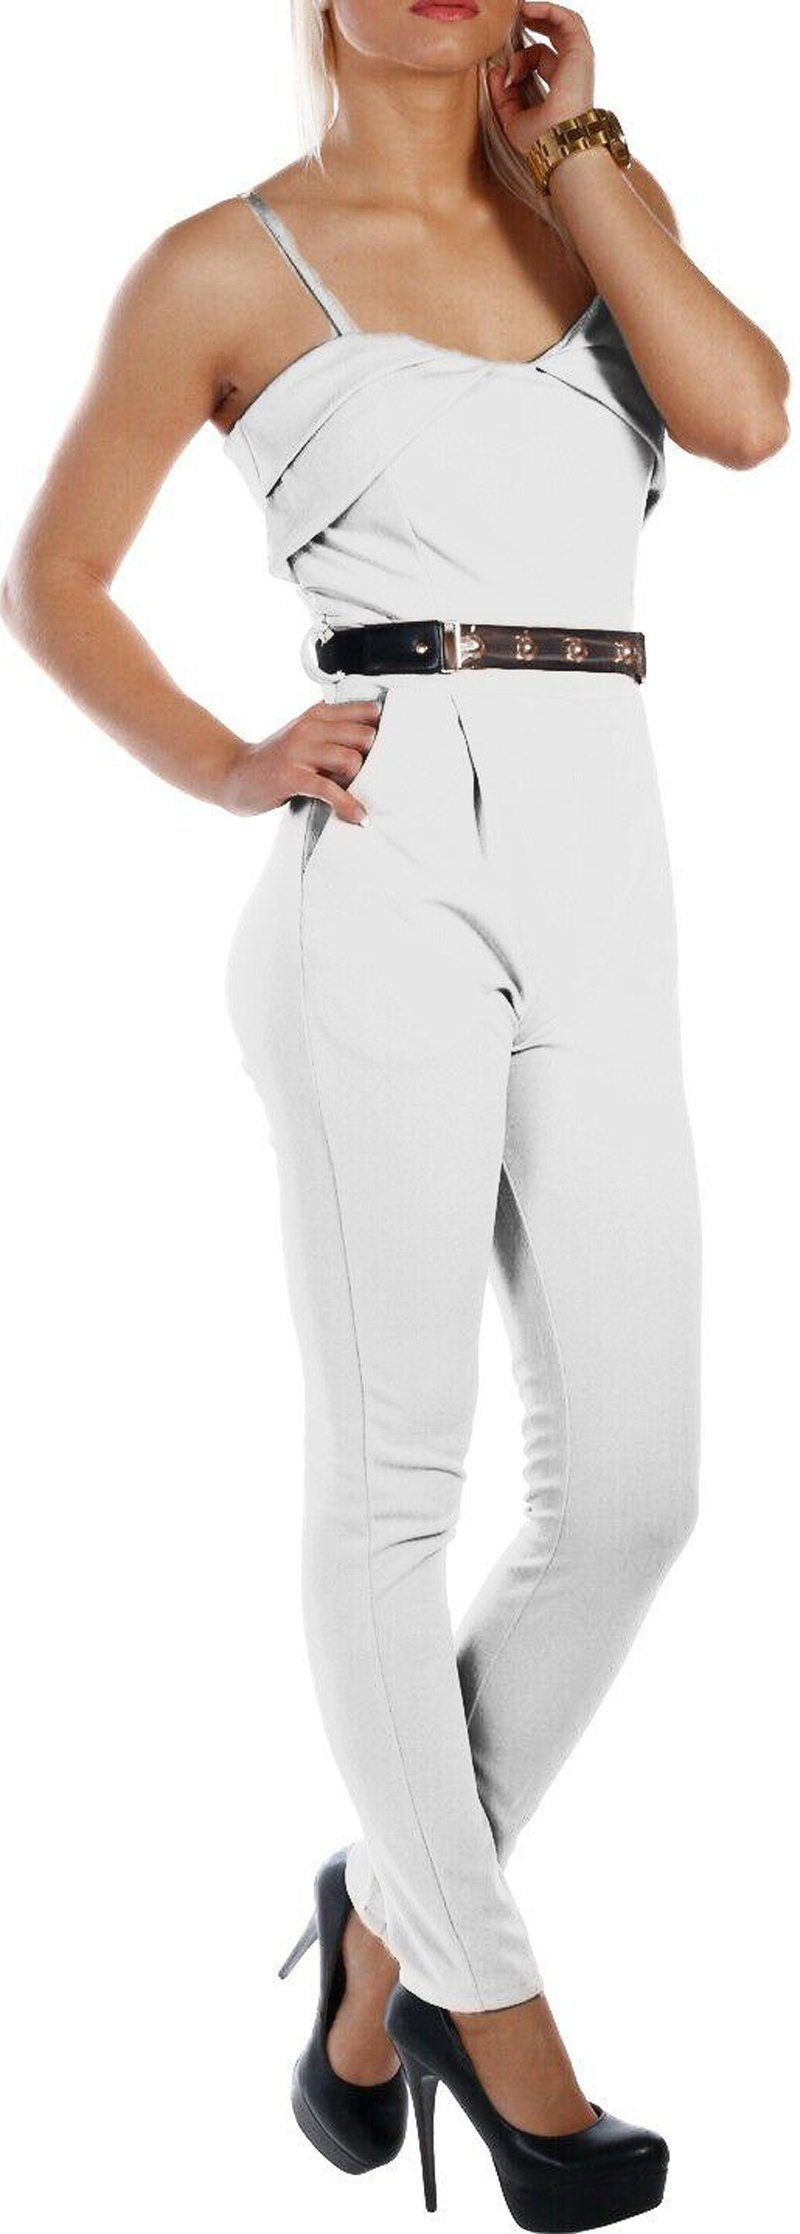 Charis Moda Jumpsuit Overall lang verstellbaren unifarben Spaghettiträgern Weiß mit